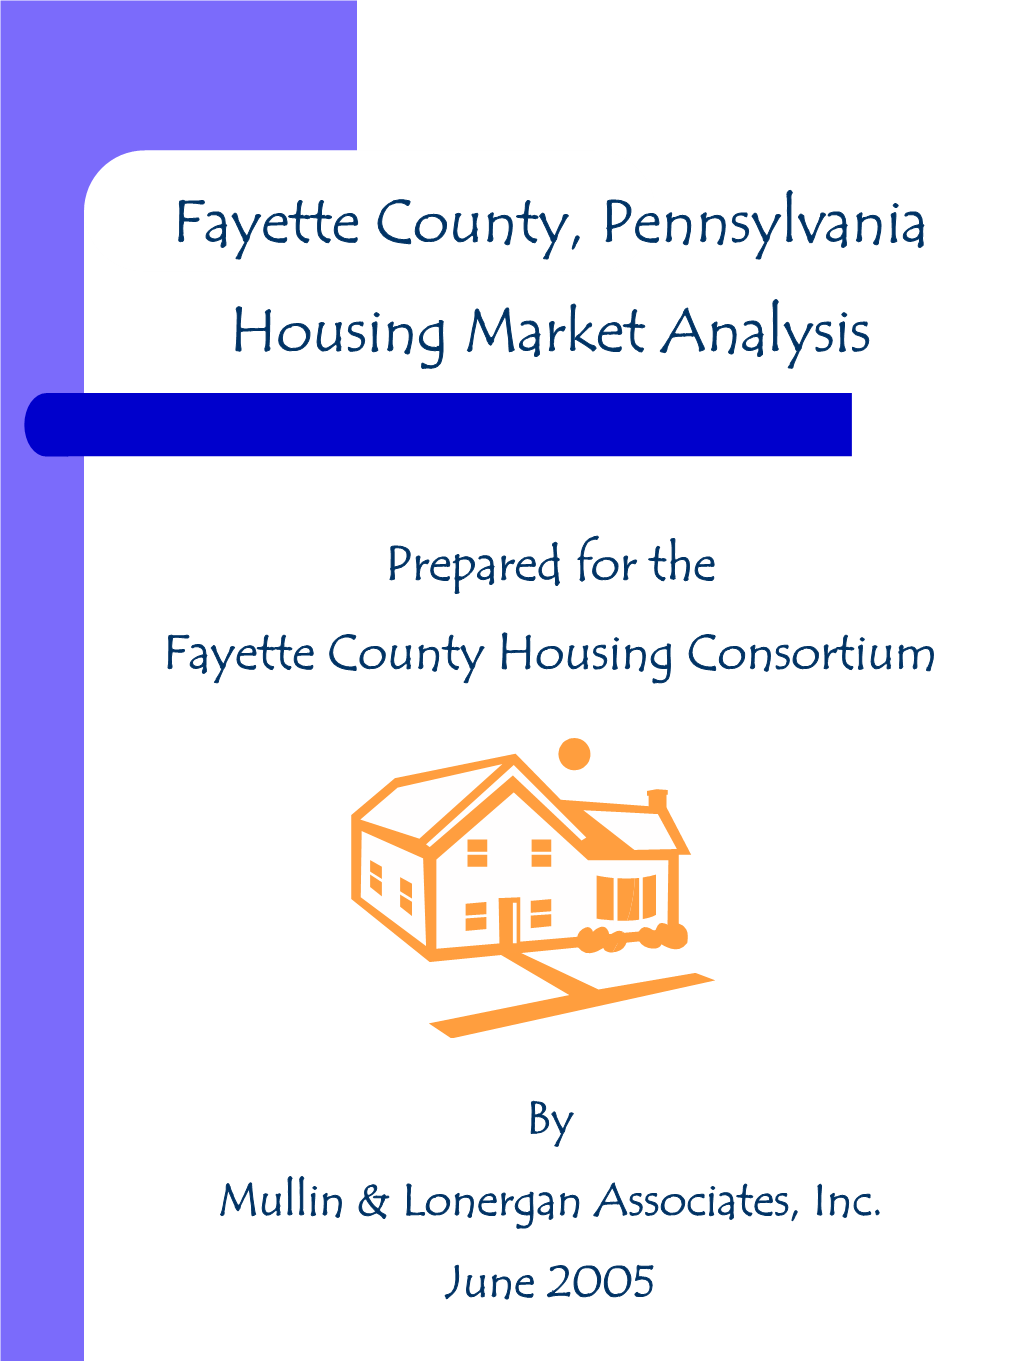 Fayette County, Pennsylvania Housing Market Analysis